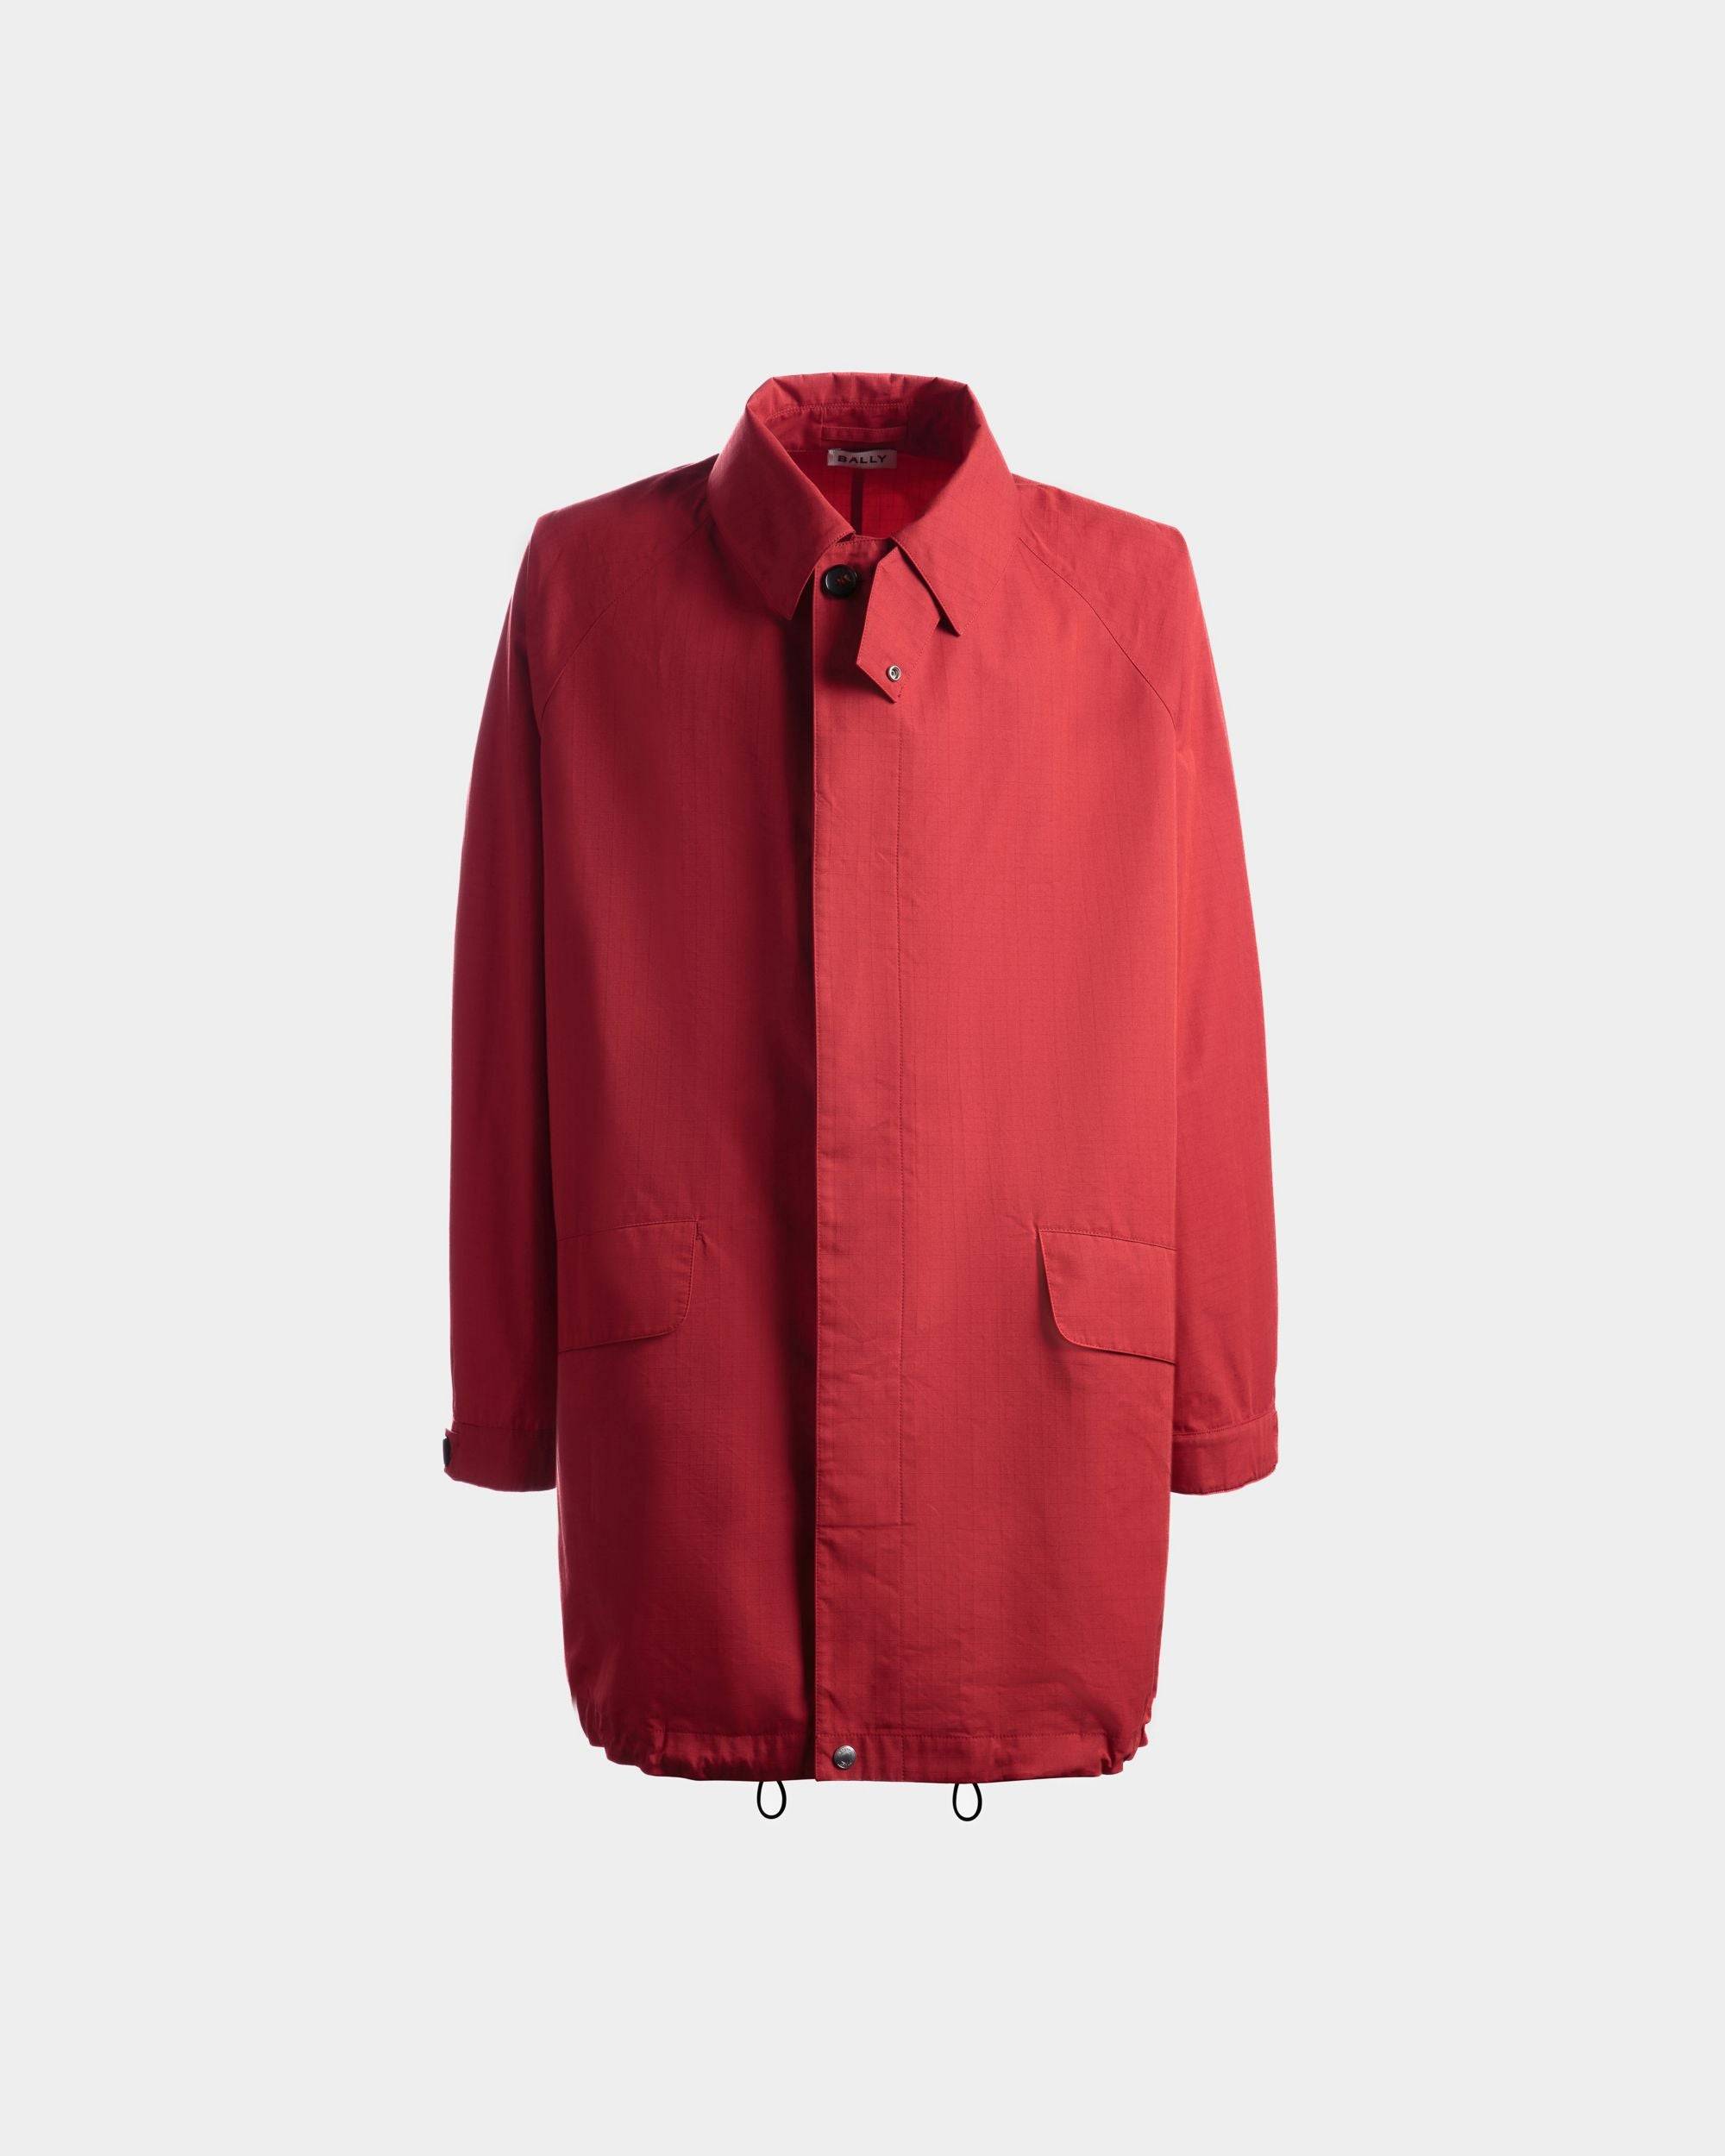 Men's Coat in Candy Red Nylon | Bally | Still Life Front